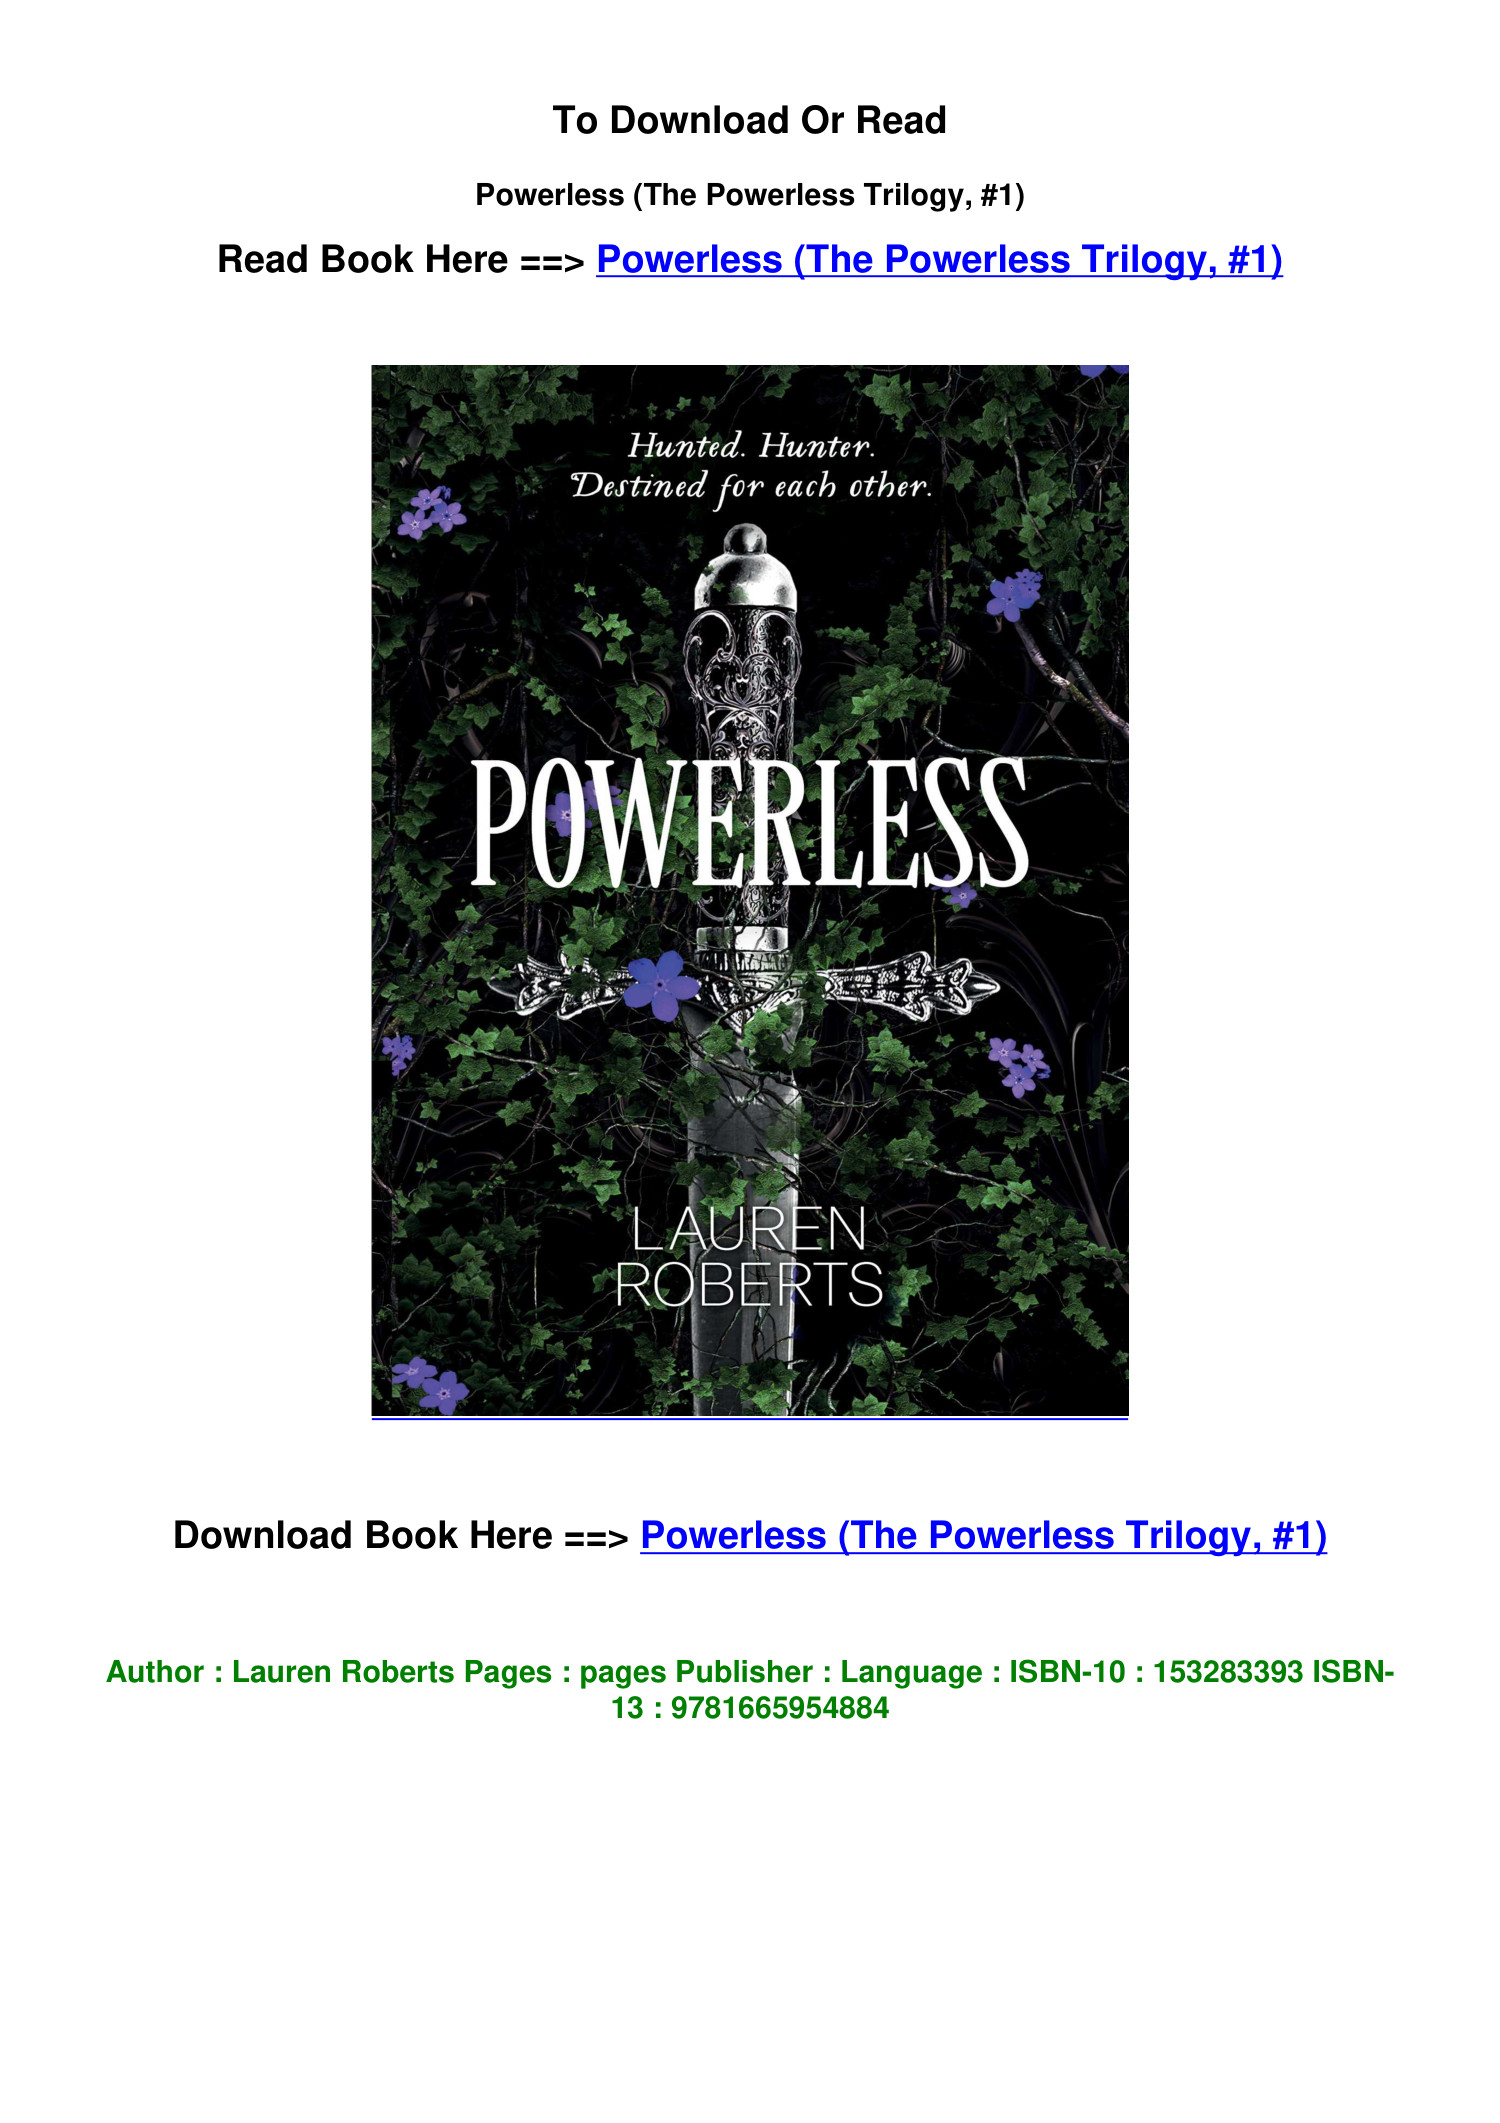 Download EPub Powerless The Powerless Trilogy 1 by Lauren Roberts.pdf